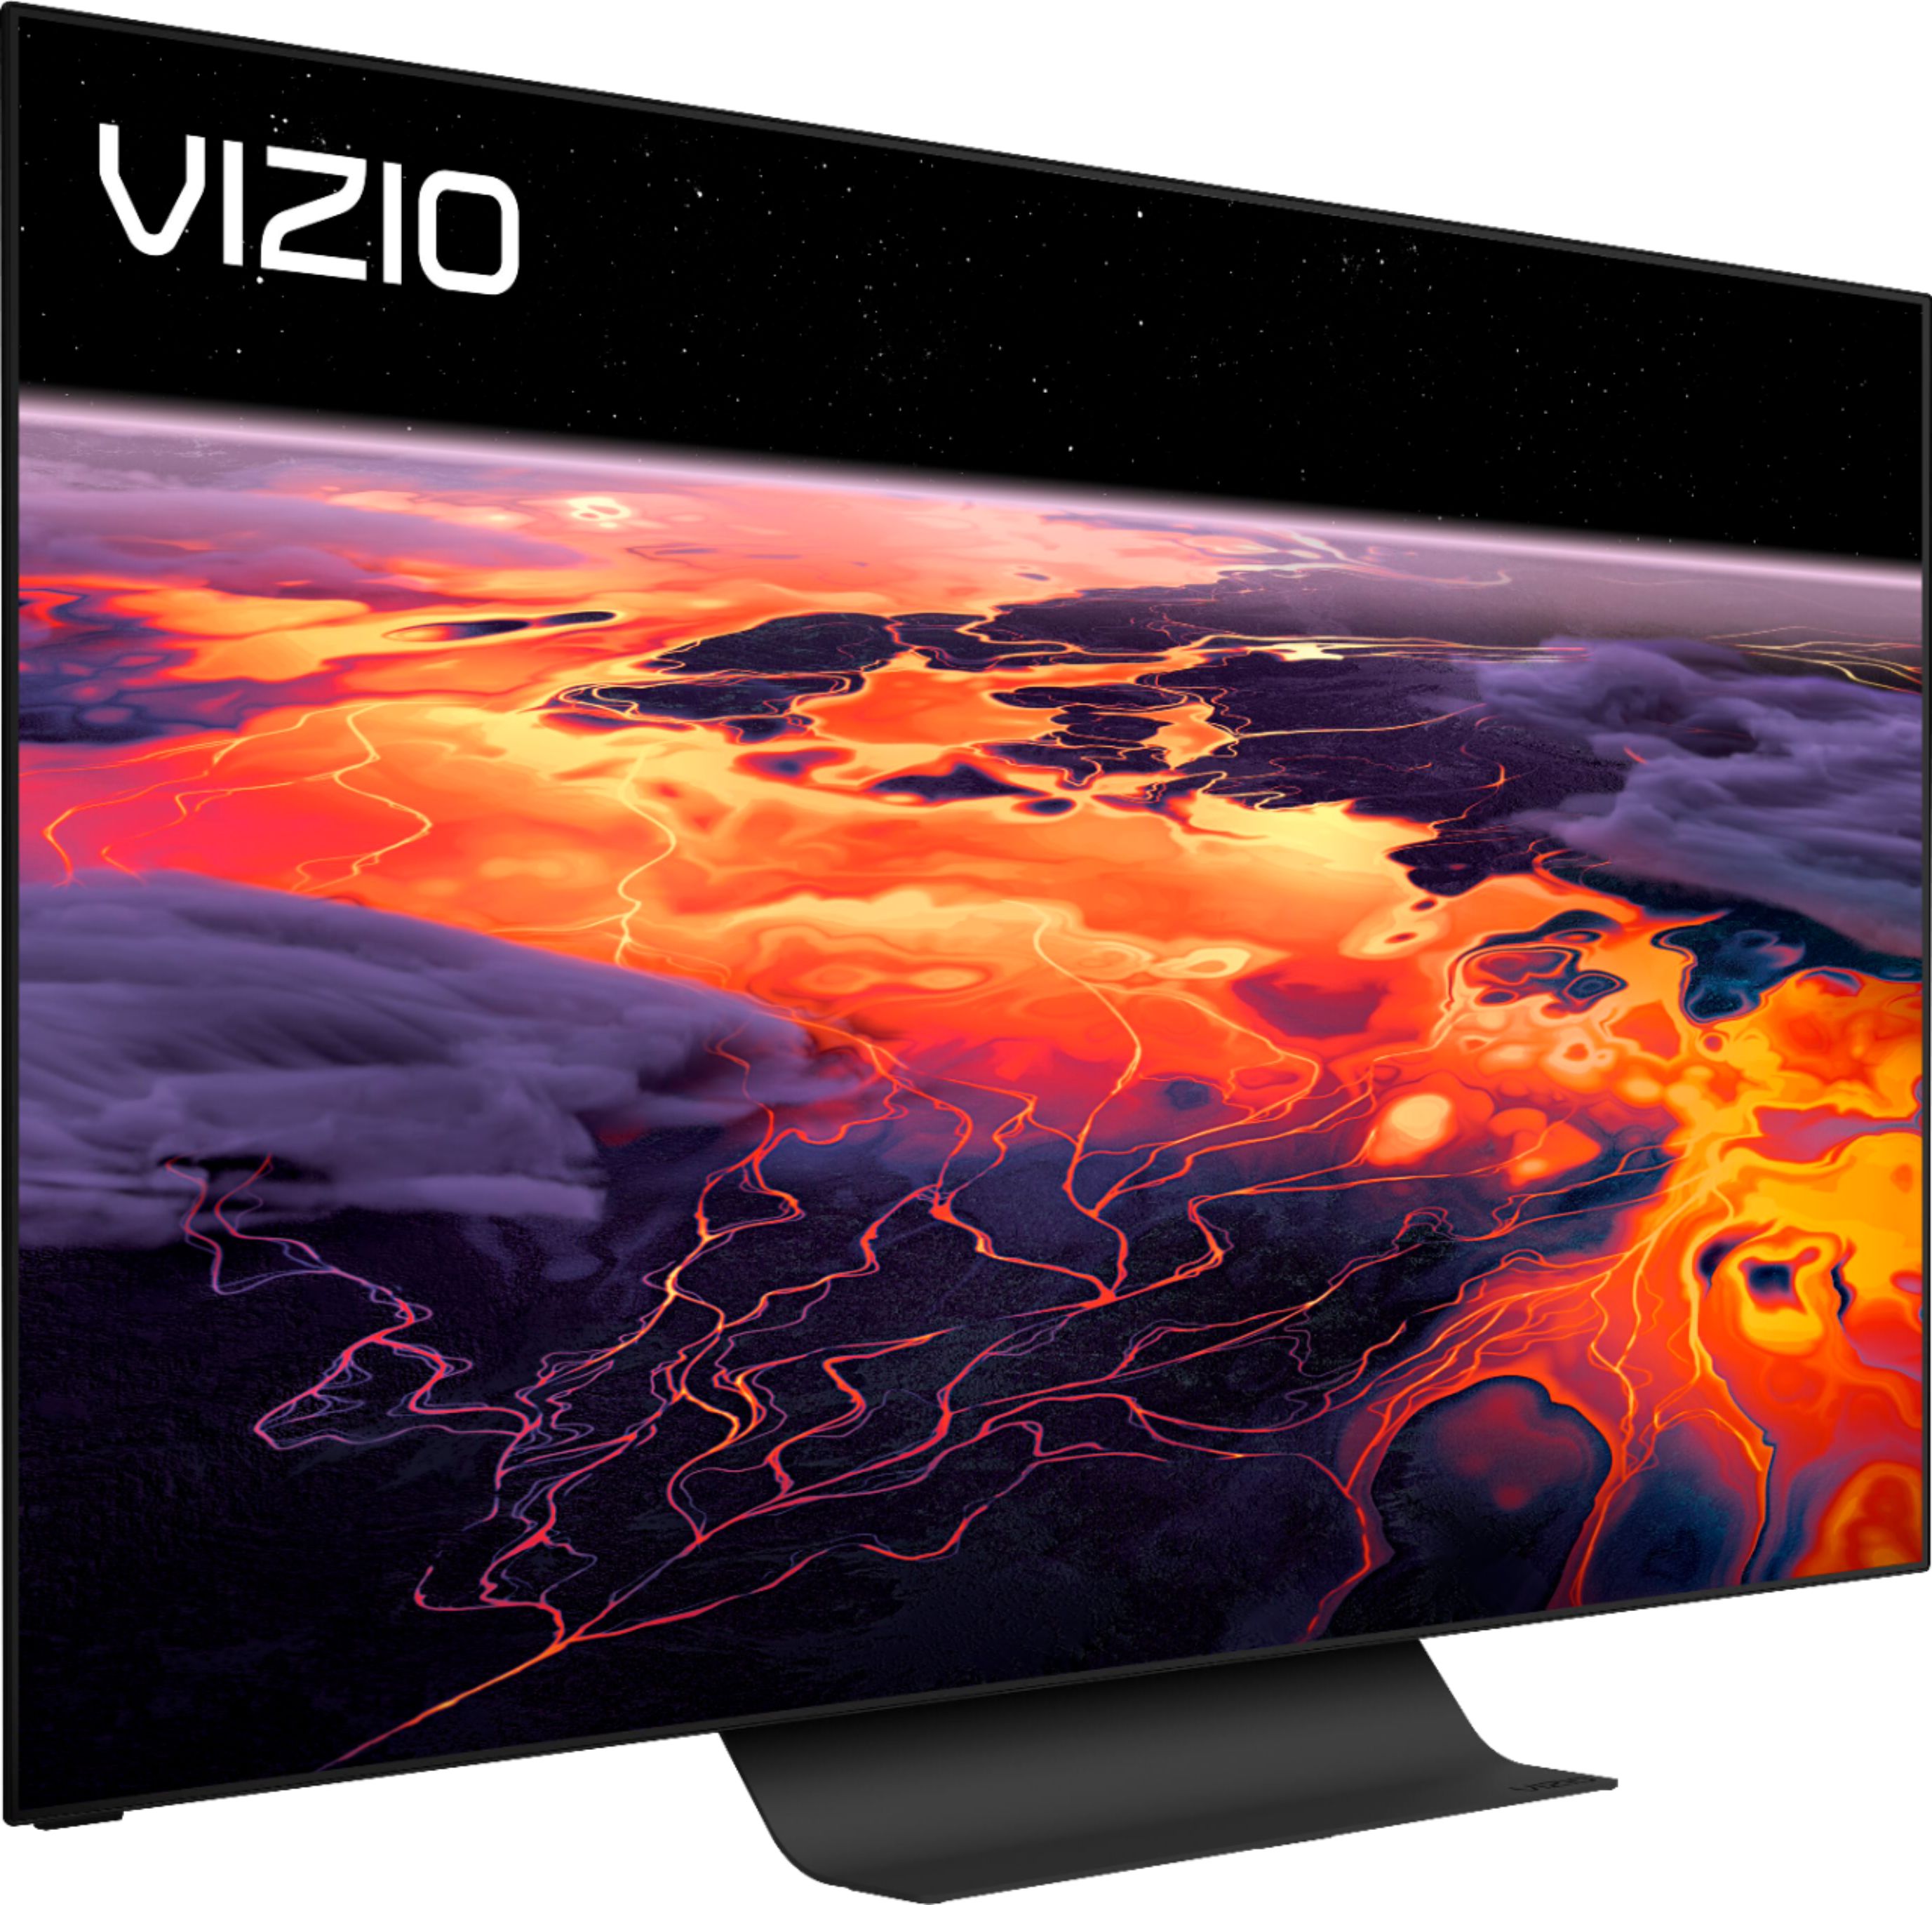 Angle View: VIZIO - 55" Class OLED 4K UHD SmartCast TV